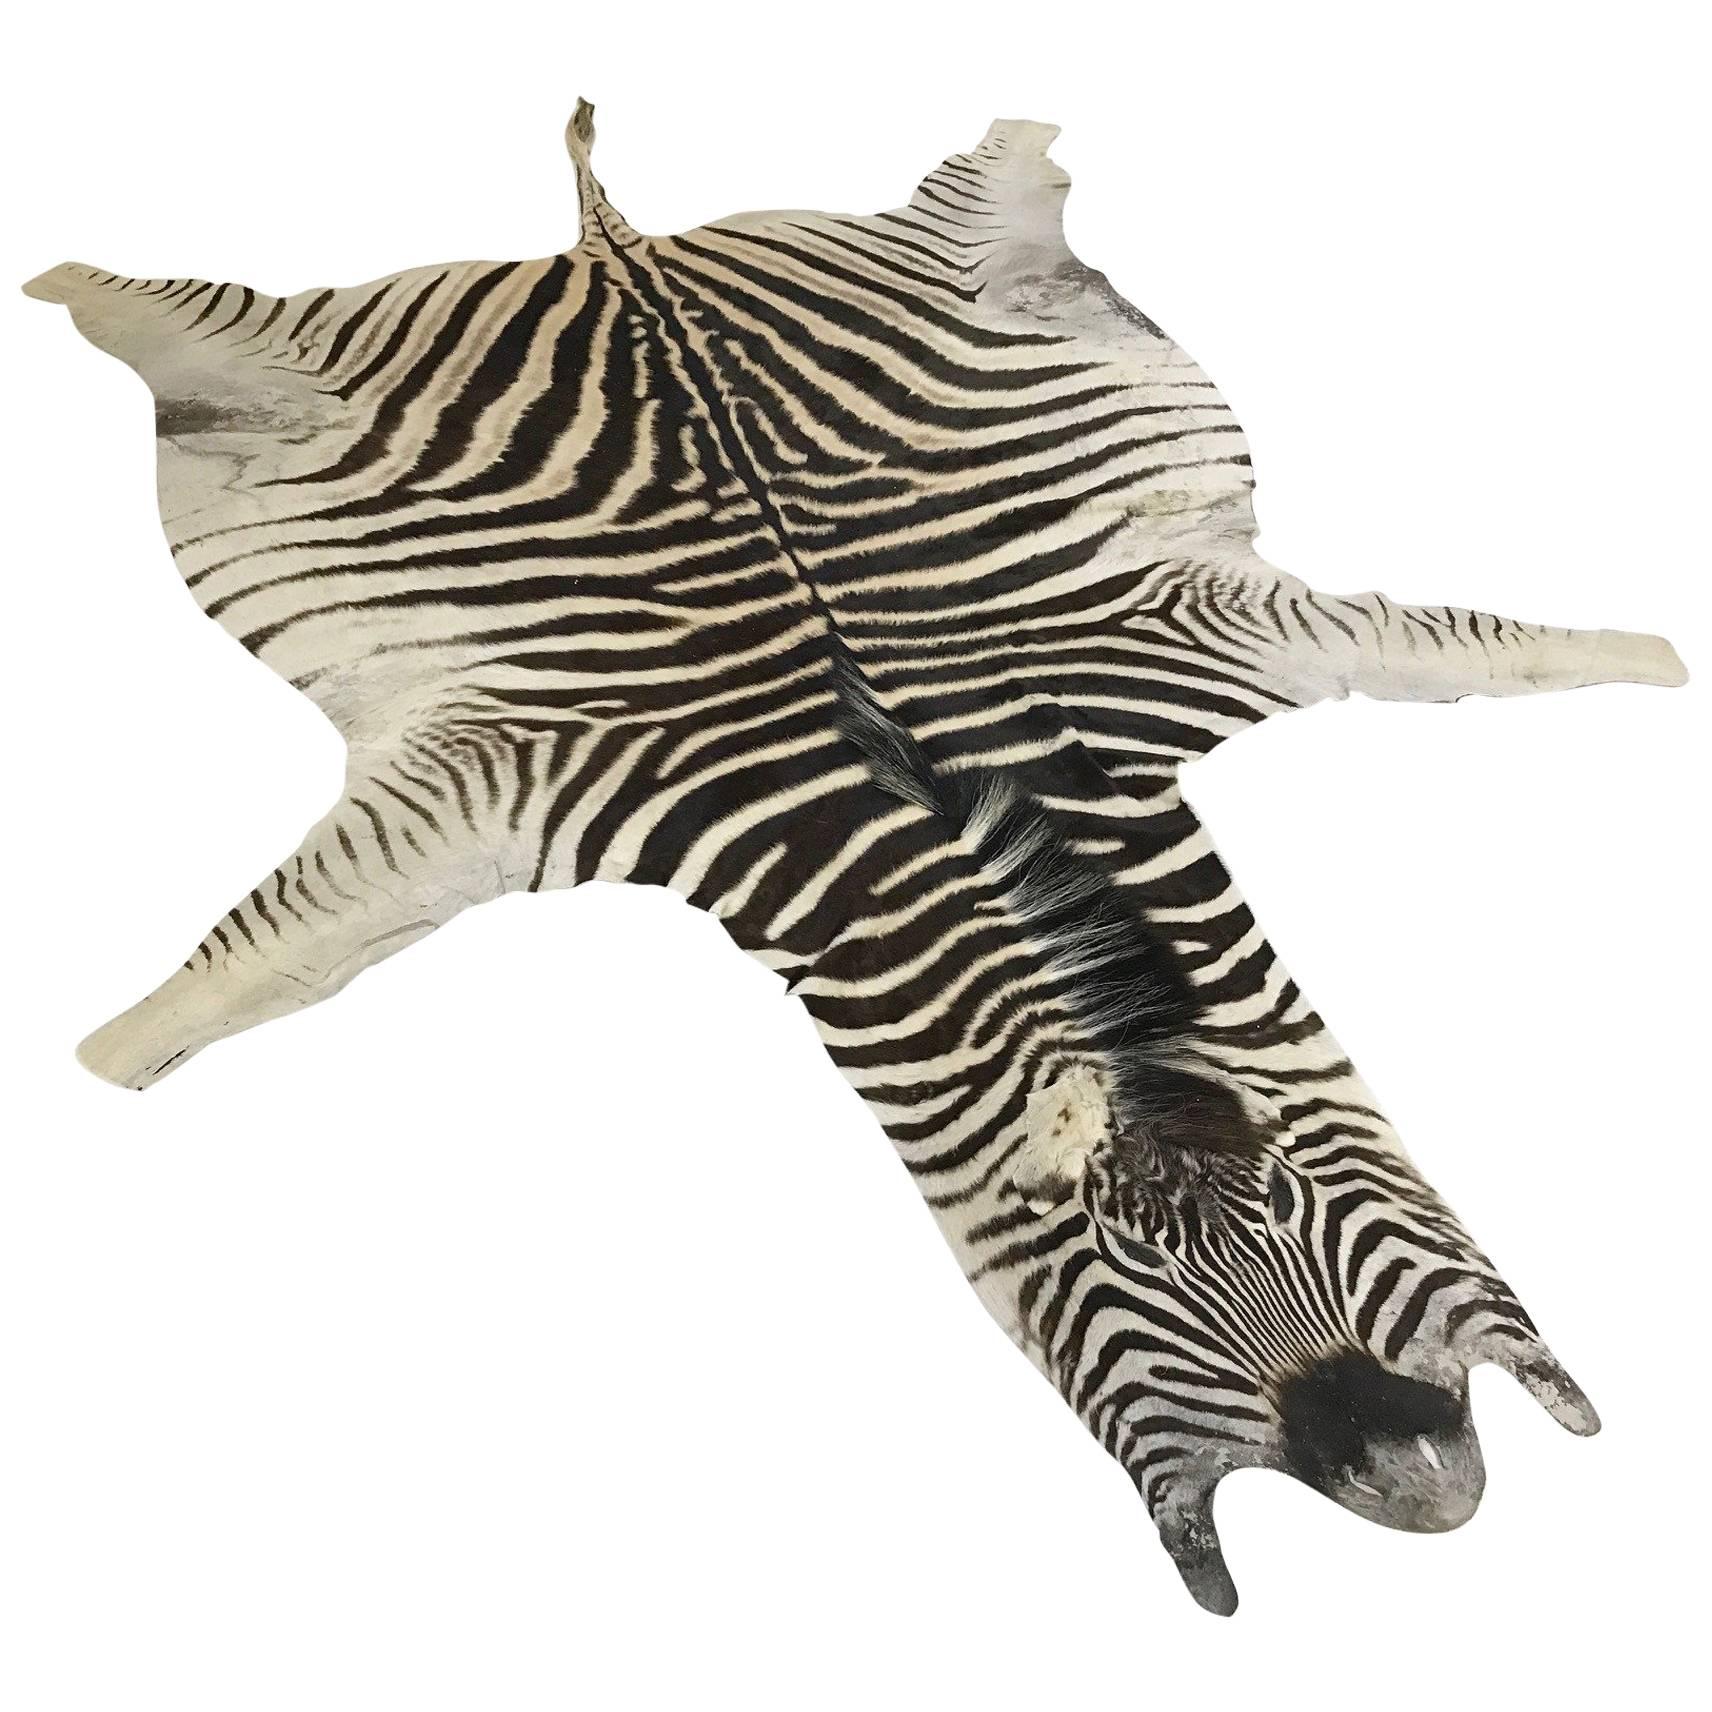 Zebra Hide Rug